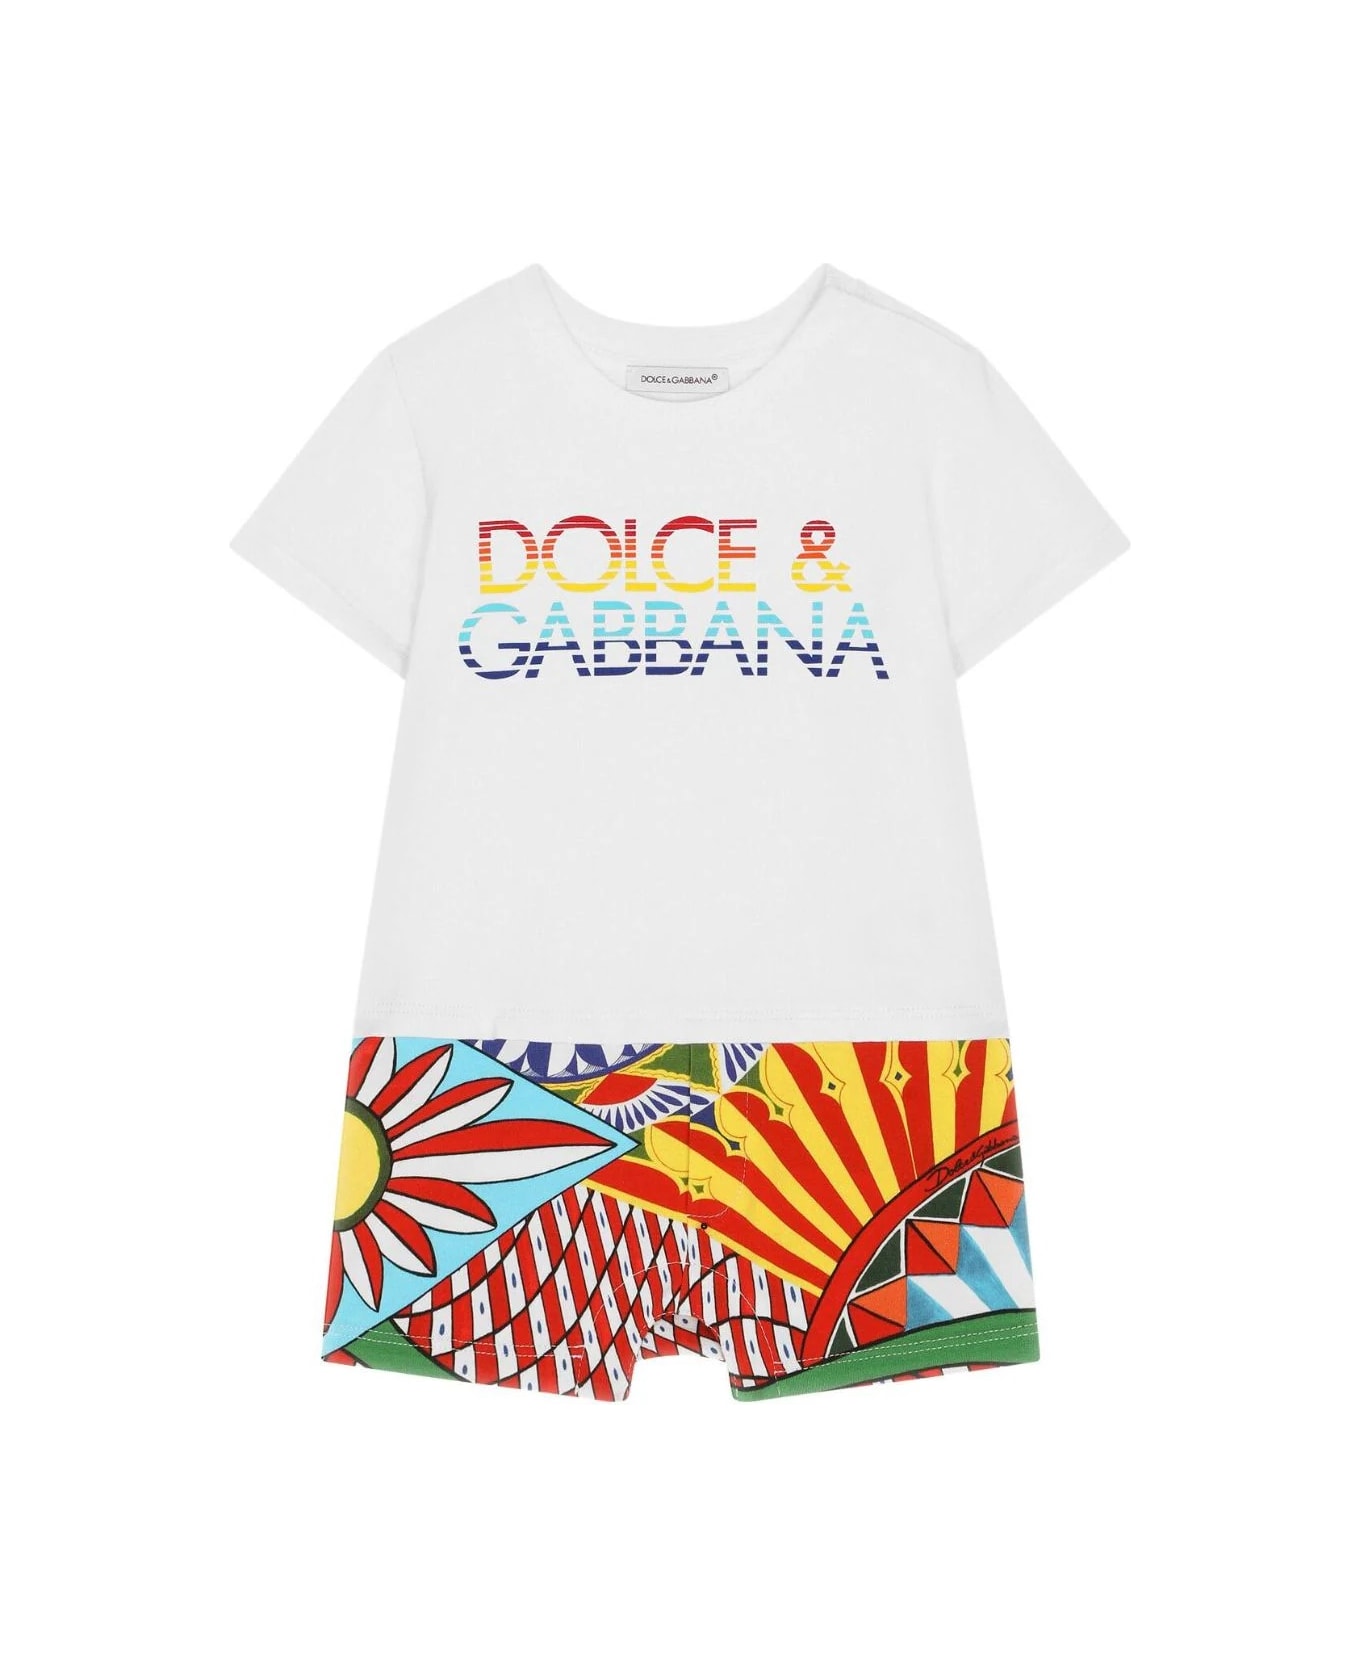 Dolce & Gabbana Cart Print Jersey Playsuit - Multicolour